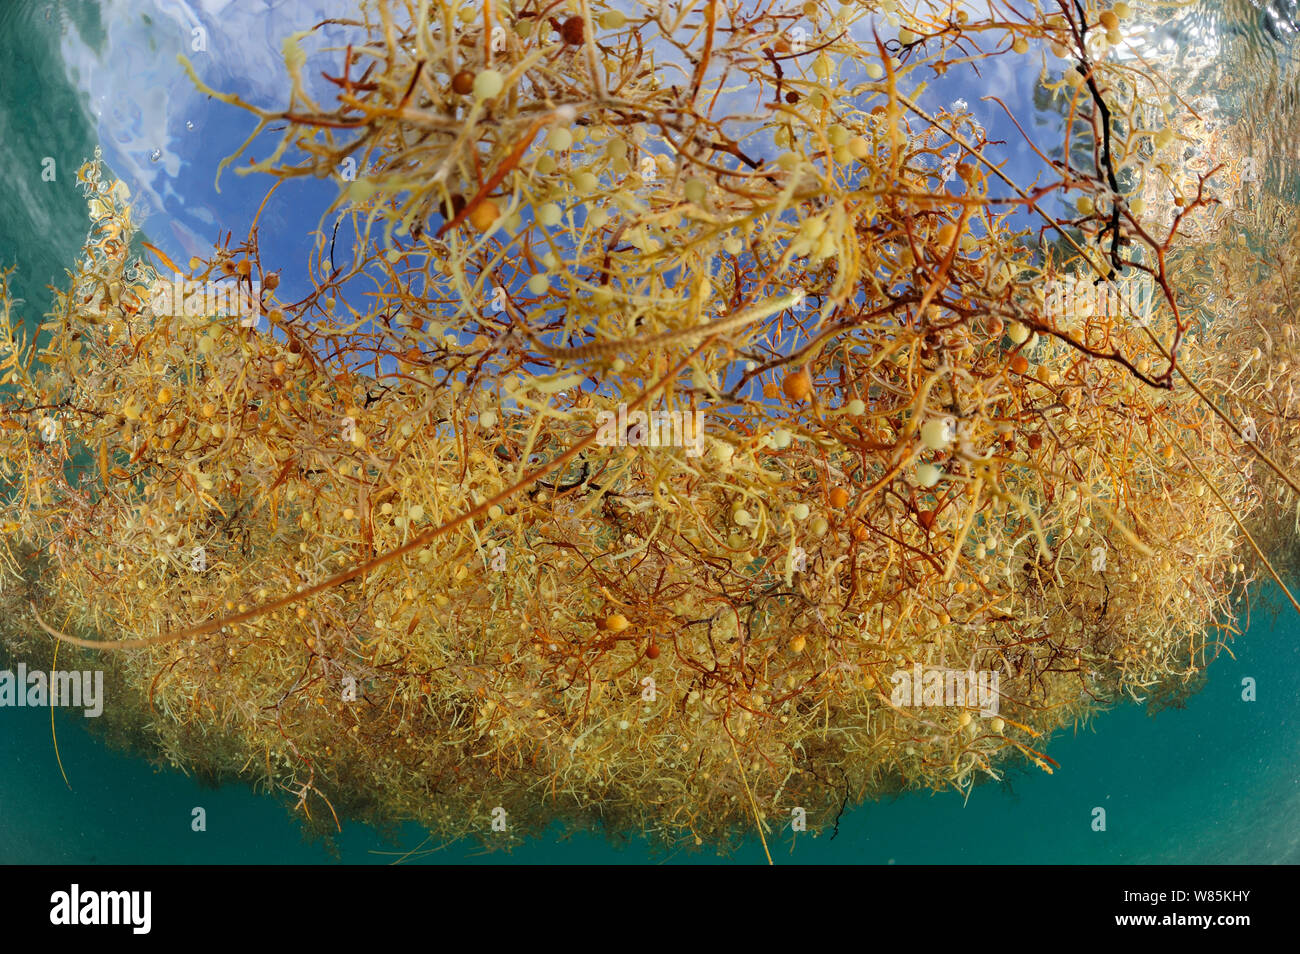 Common sargasso weed (Sargassum natans) from underwater, Sargasso Sea, Bermuda Stock Photo